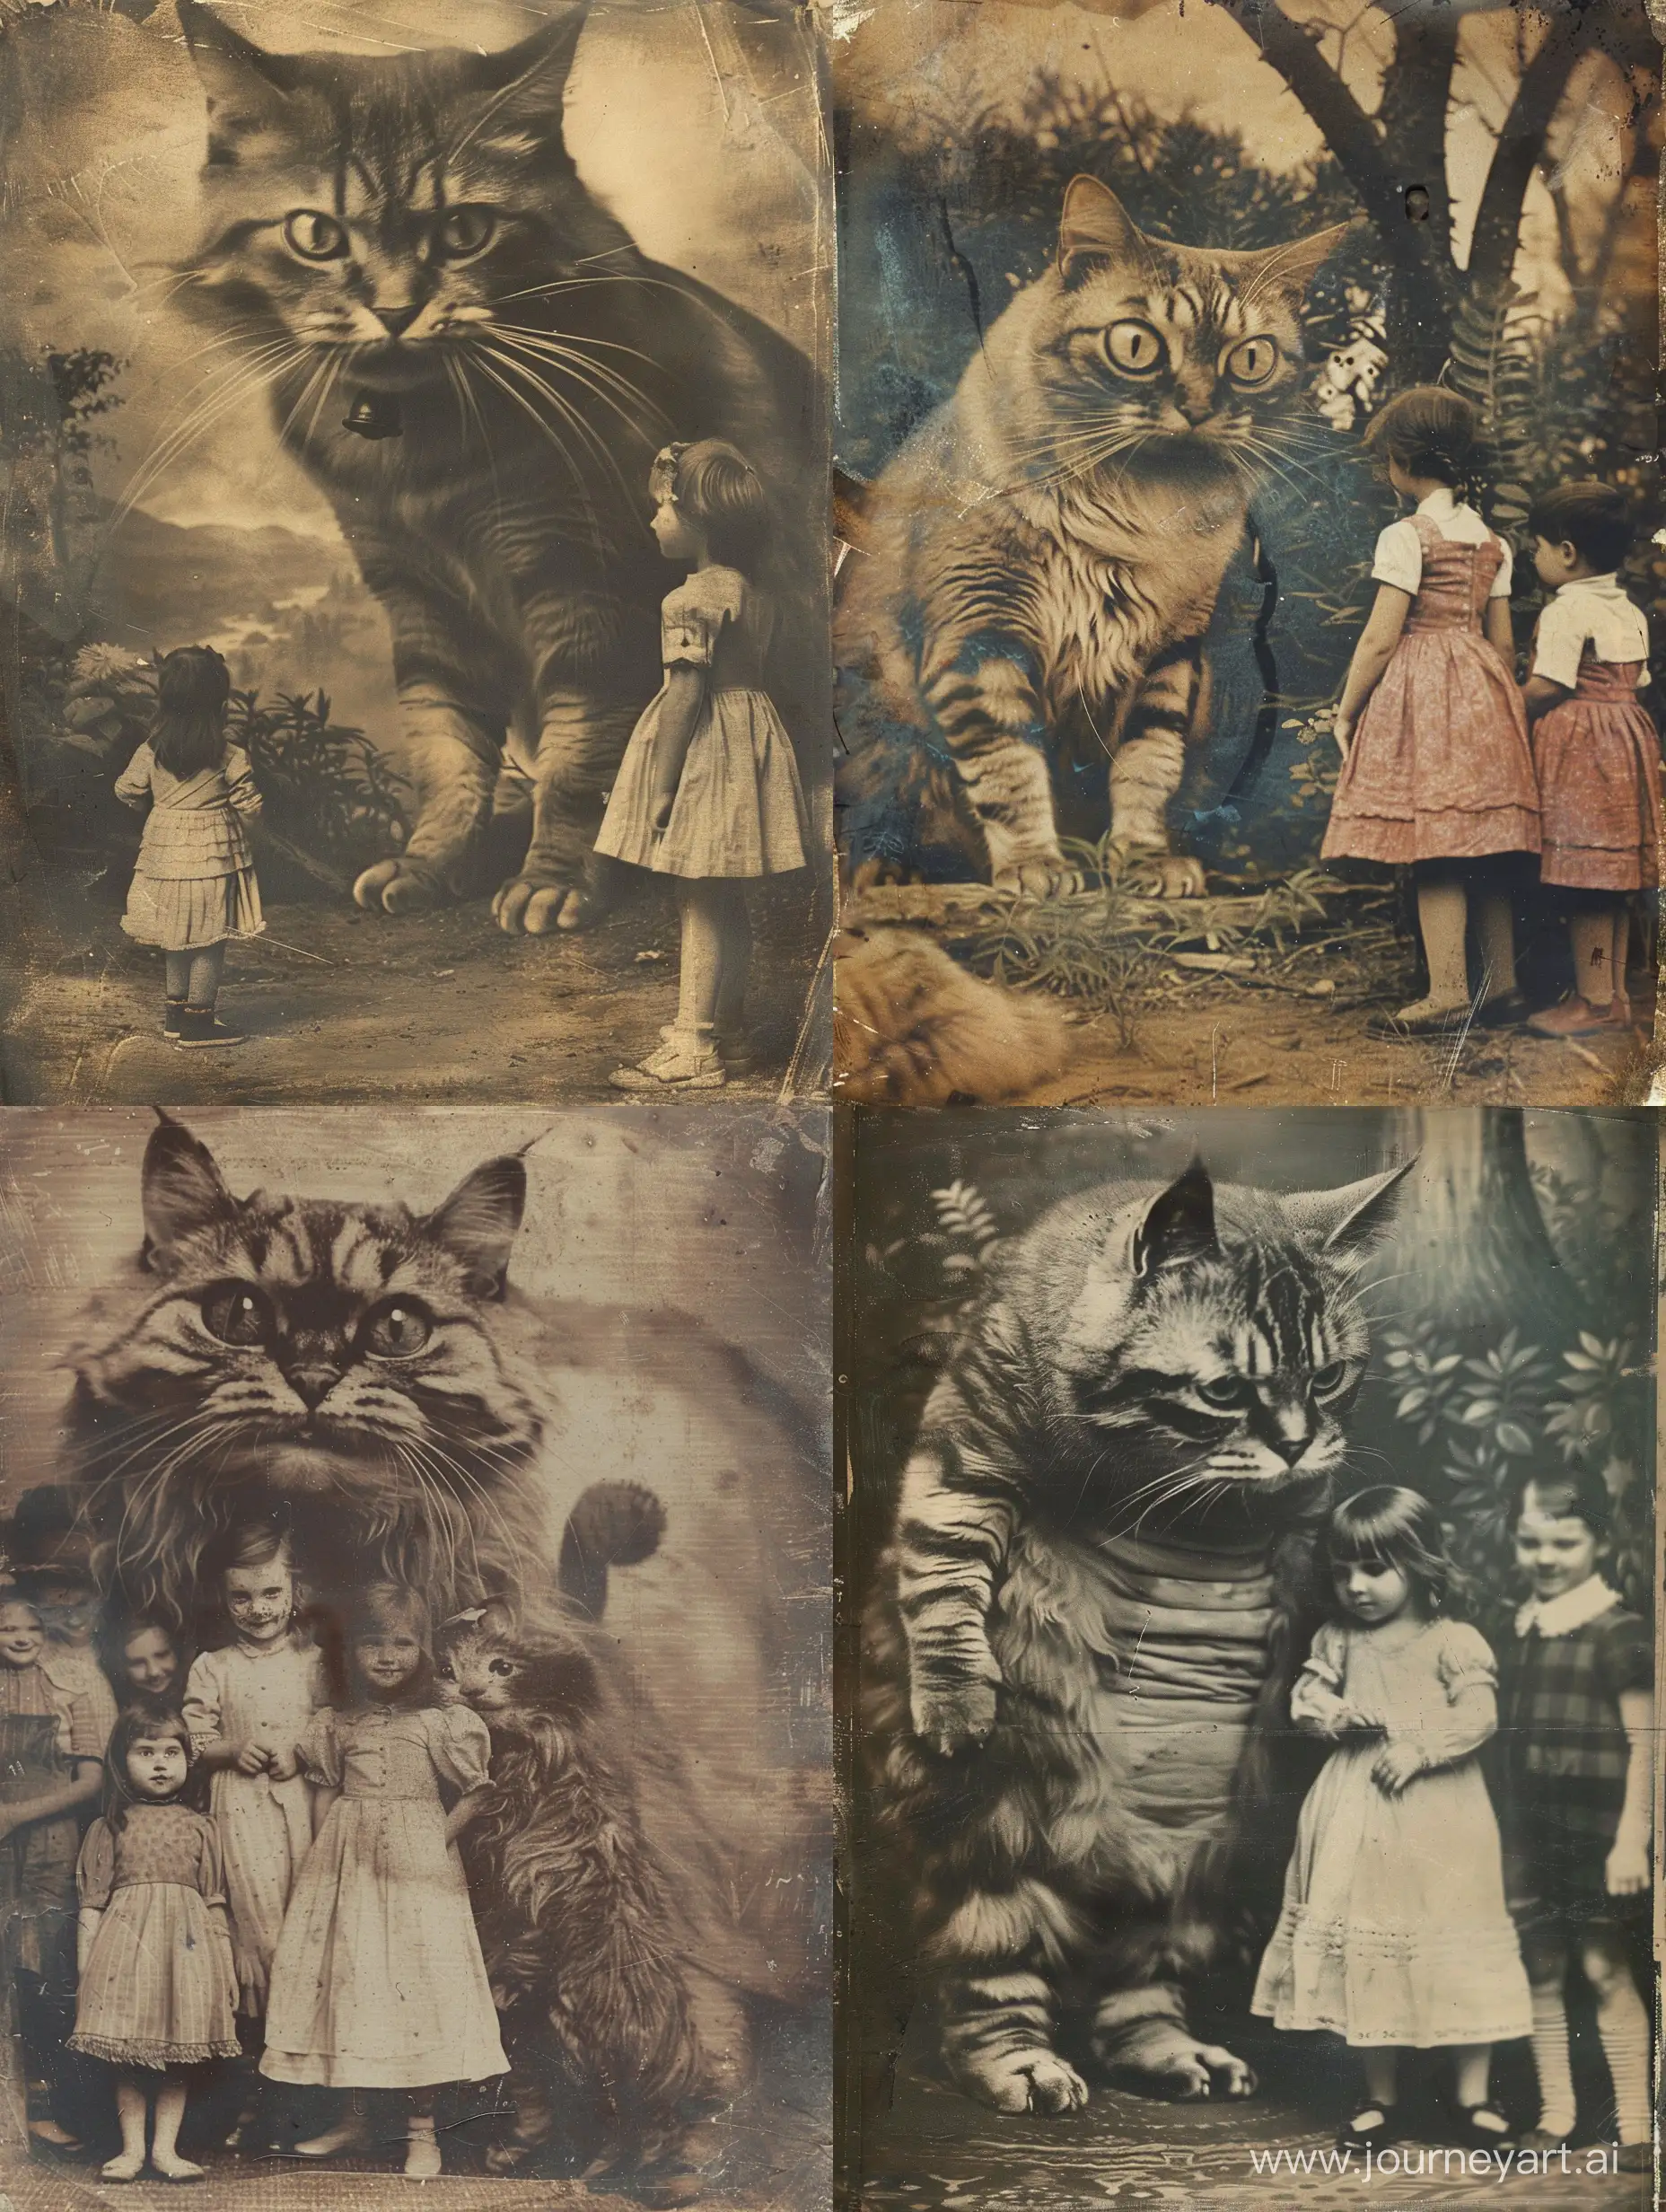 Cheshire-Cat-and-Children-in-Retro-Filtered-Dreamy-Scenes